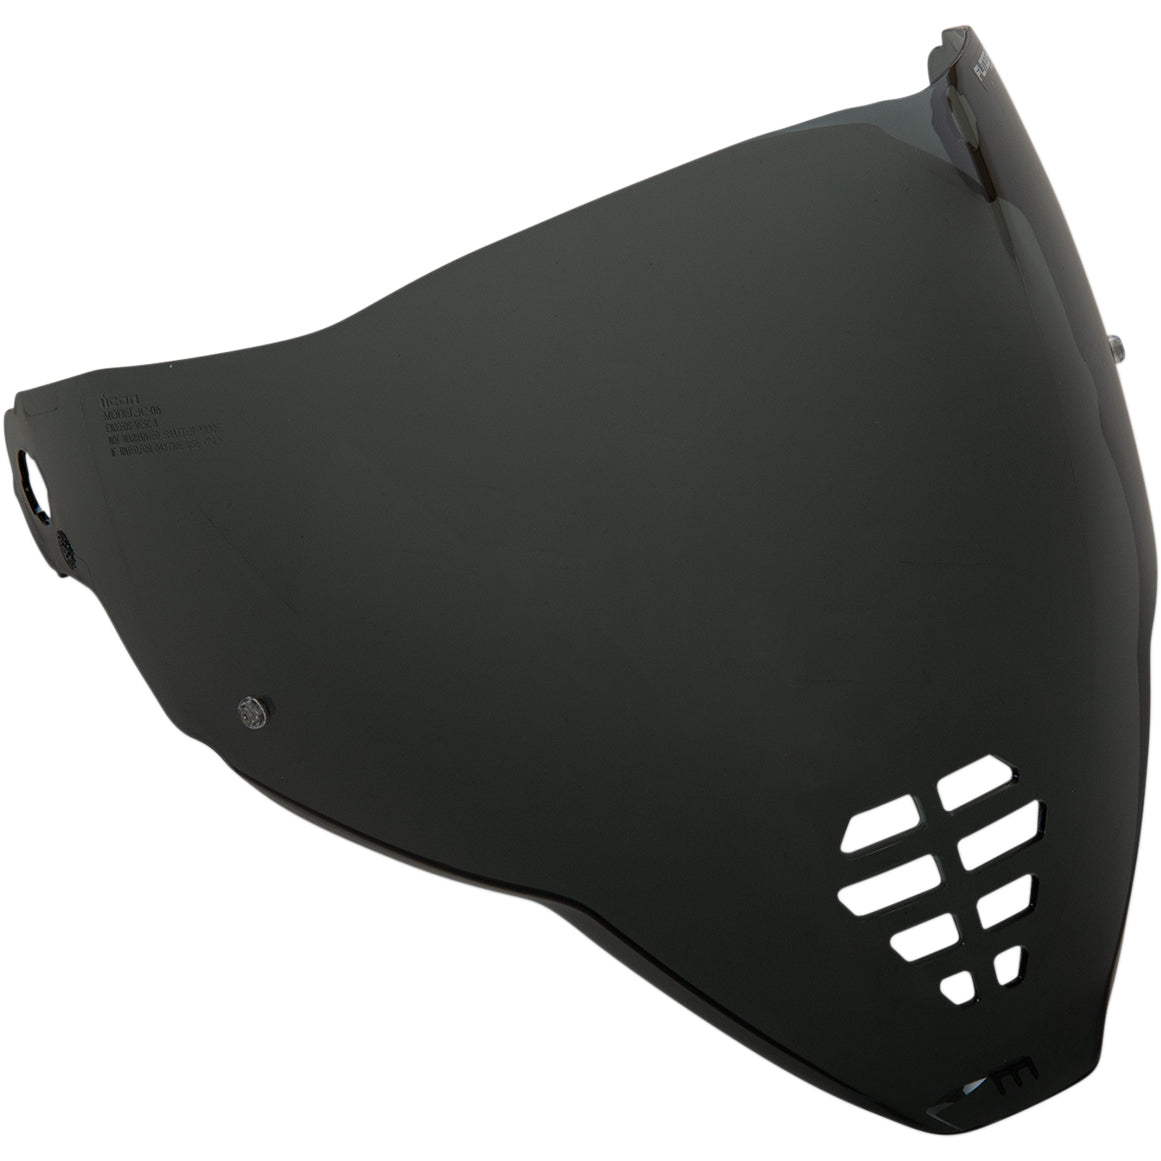 ICON Airflite™ Helmet Pinlock® FliteShield™